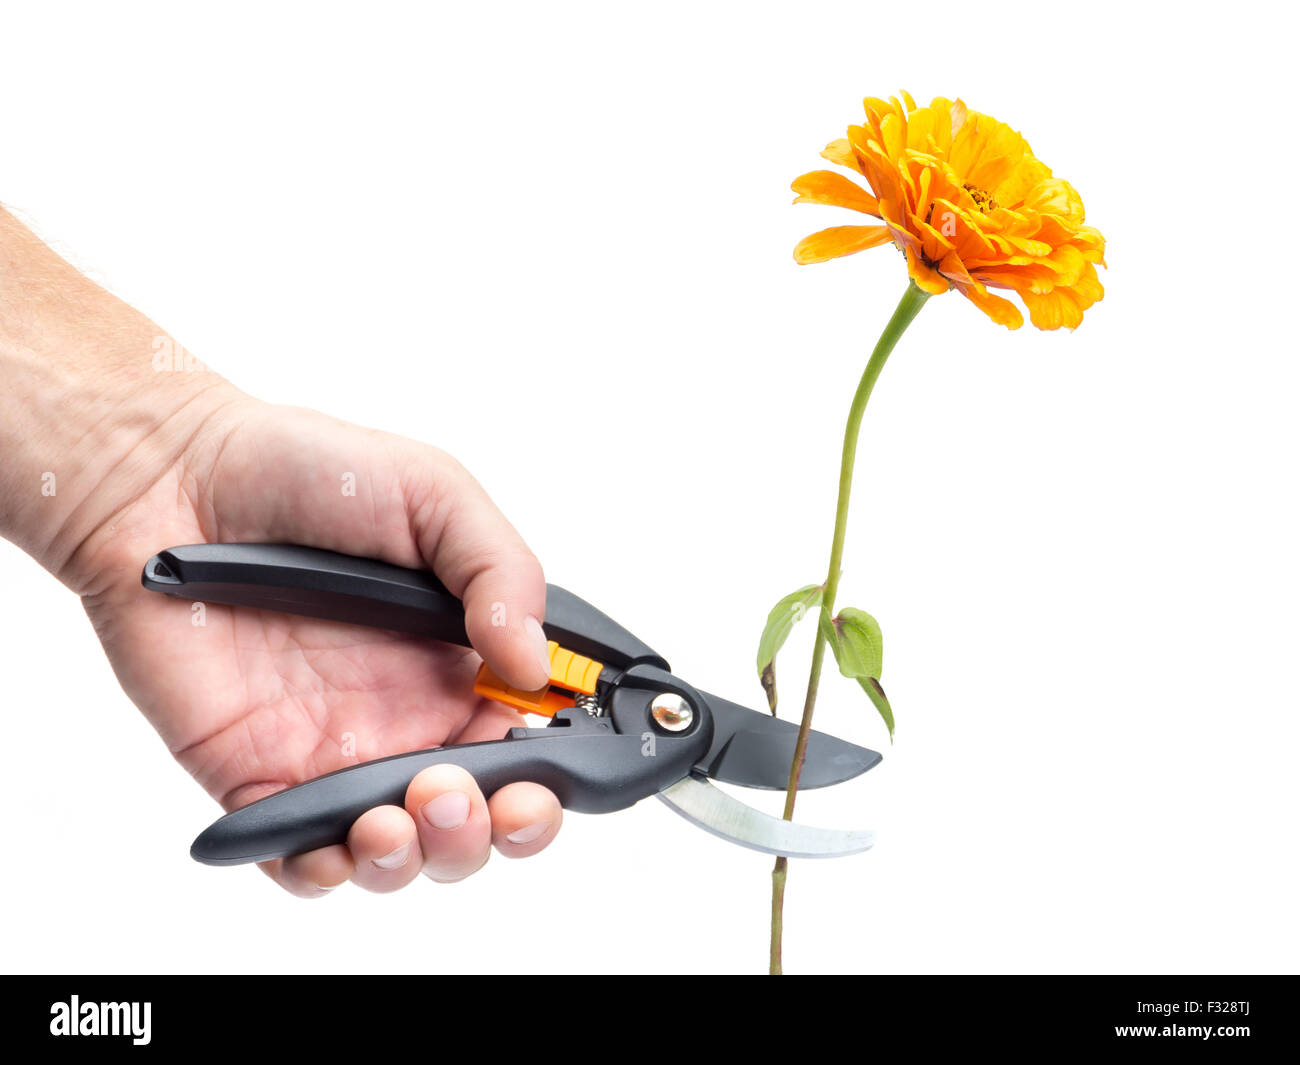 Closeup of man's hand cutting orange zinnia flower with black shears on white background Stock Photo